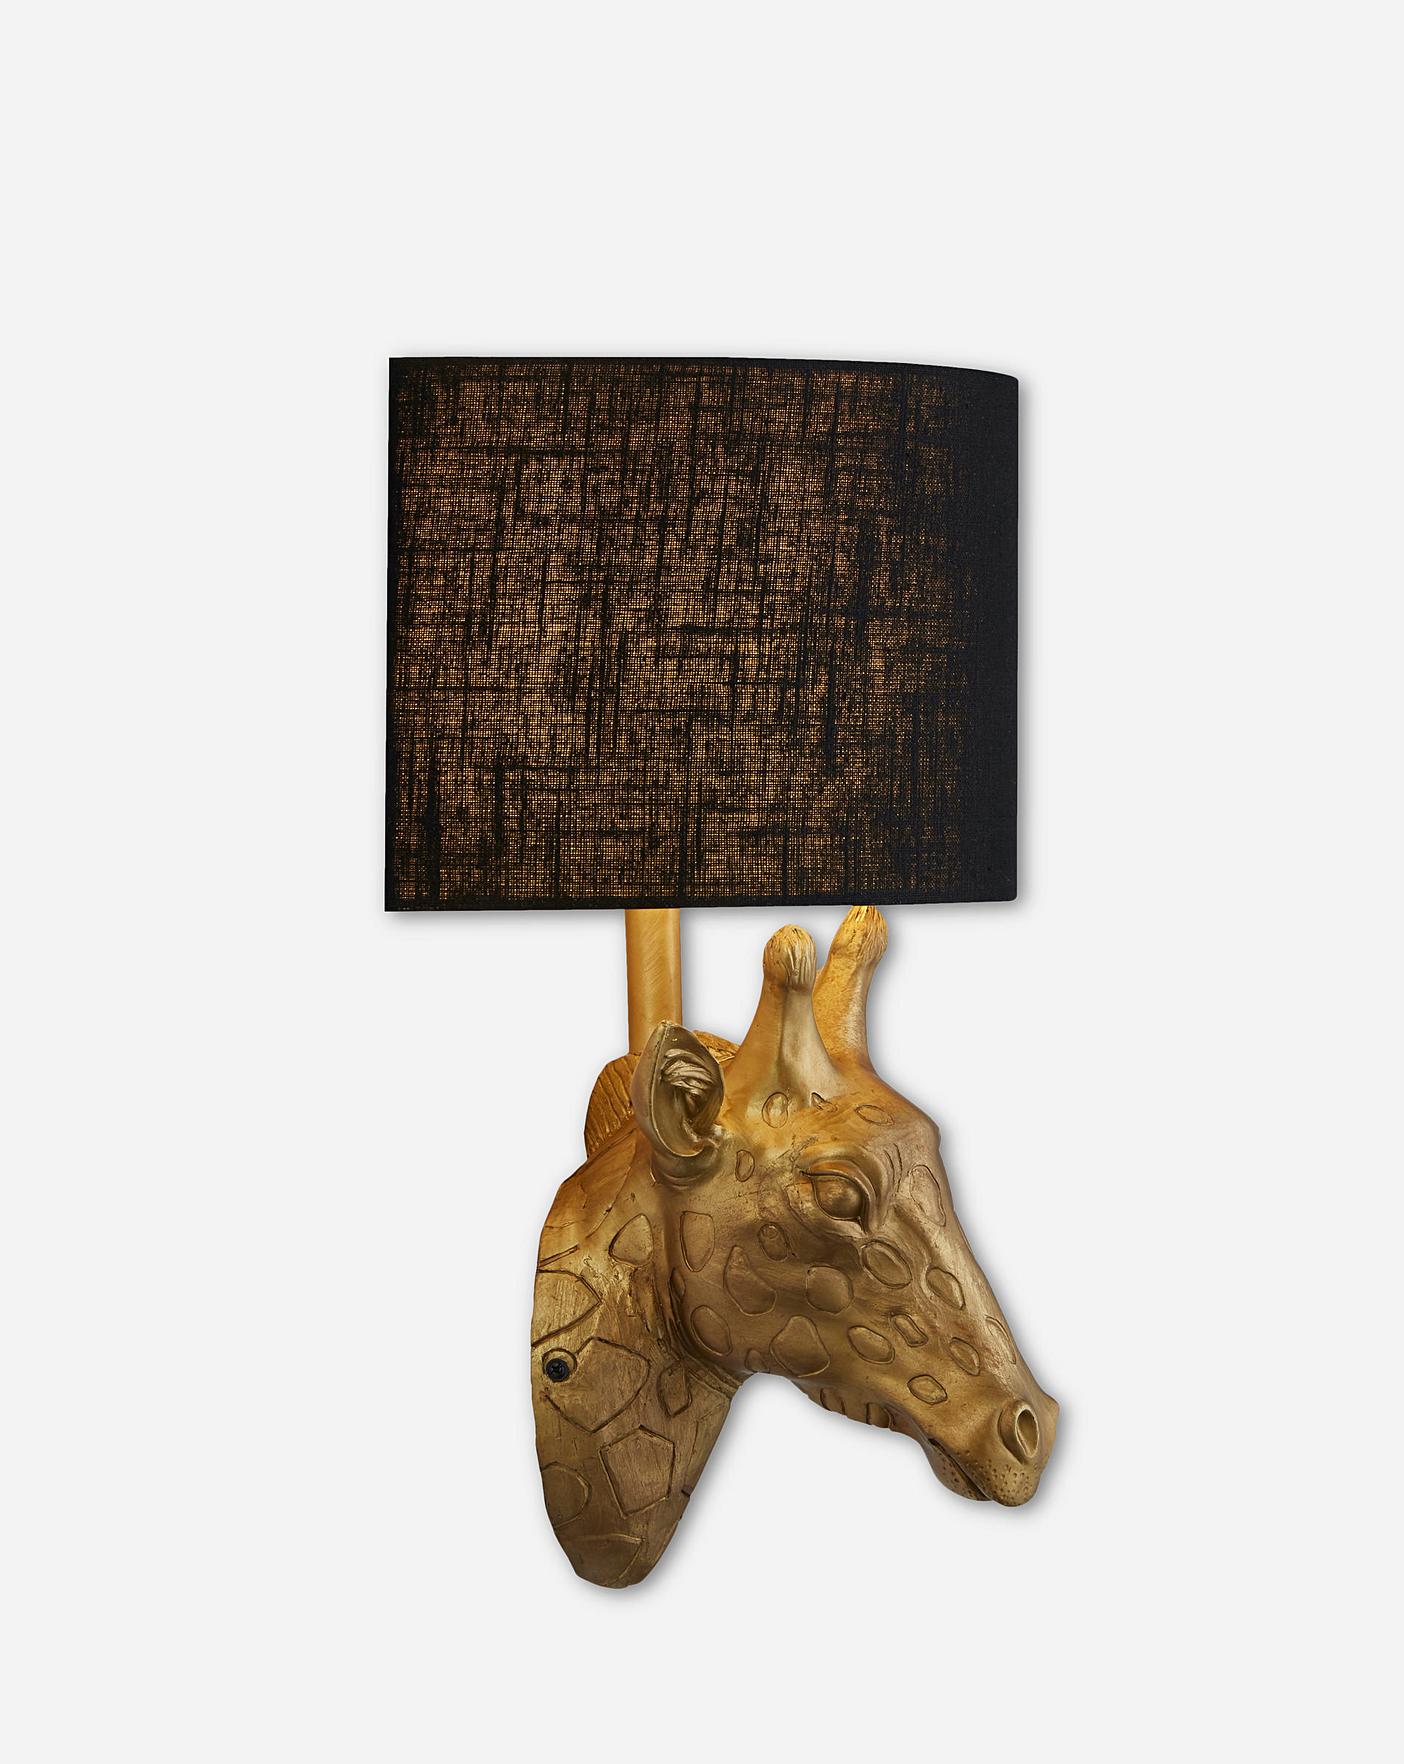 Giraffe Head Wall Lamp with Black Shade